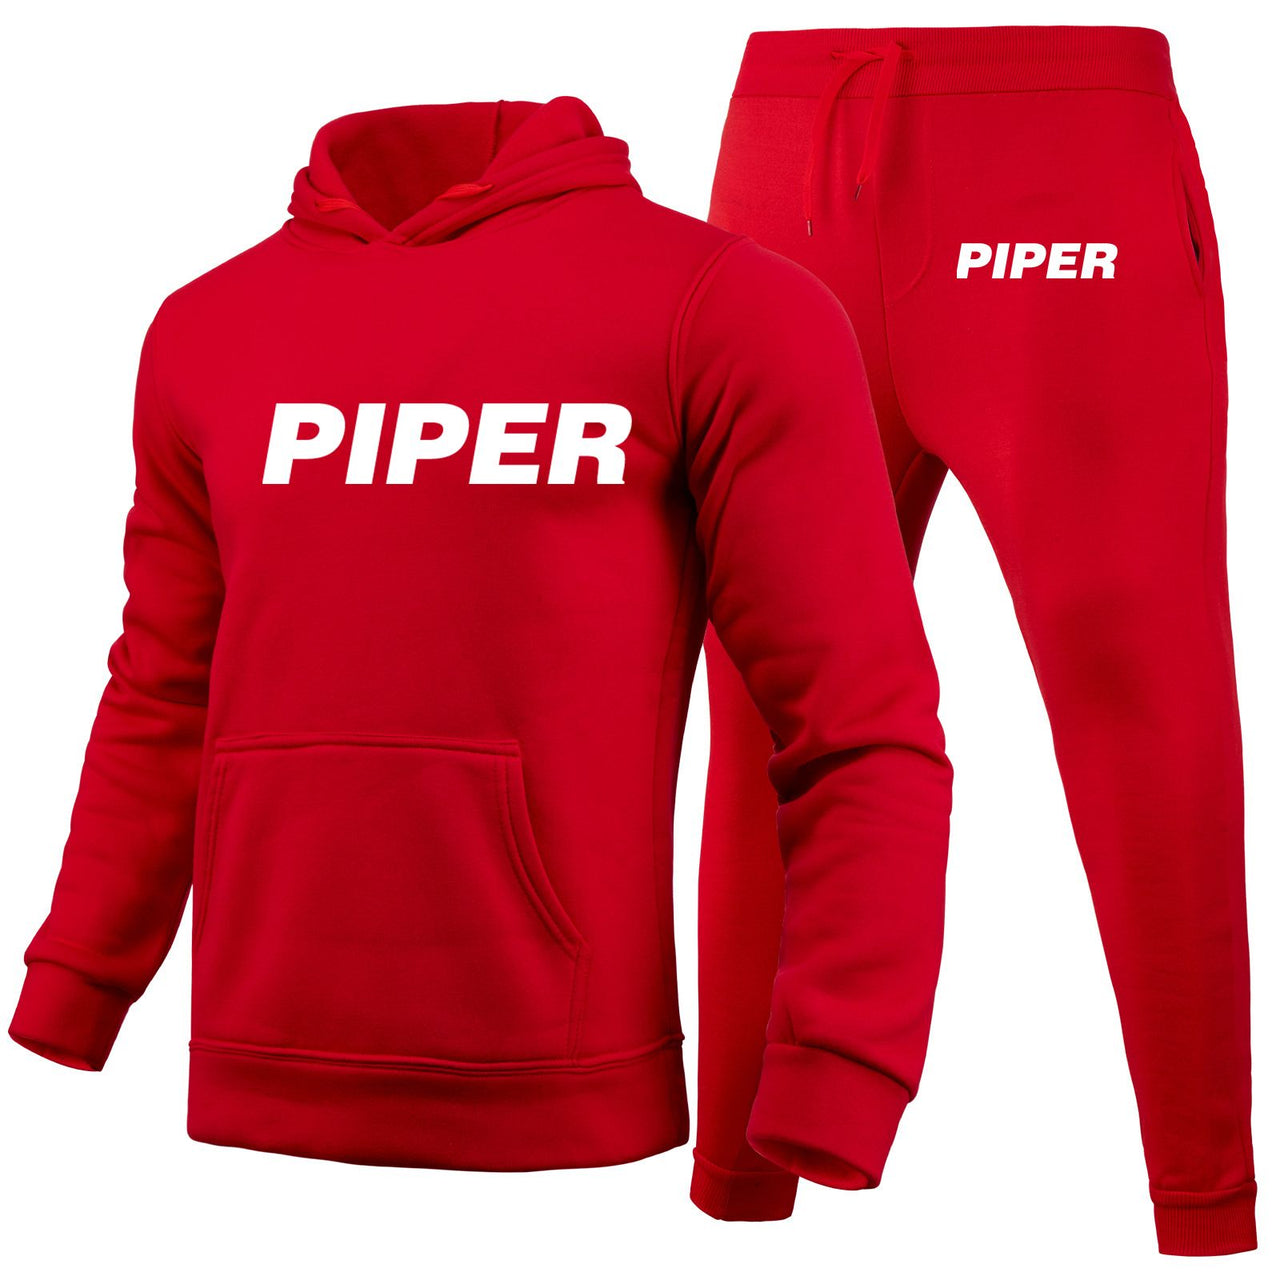 Piper & Text Designed Hoodies & Sweatpants Set